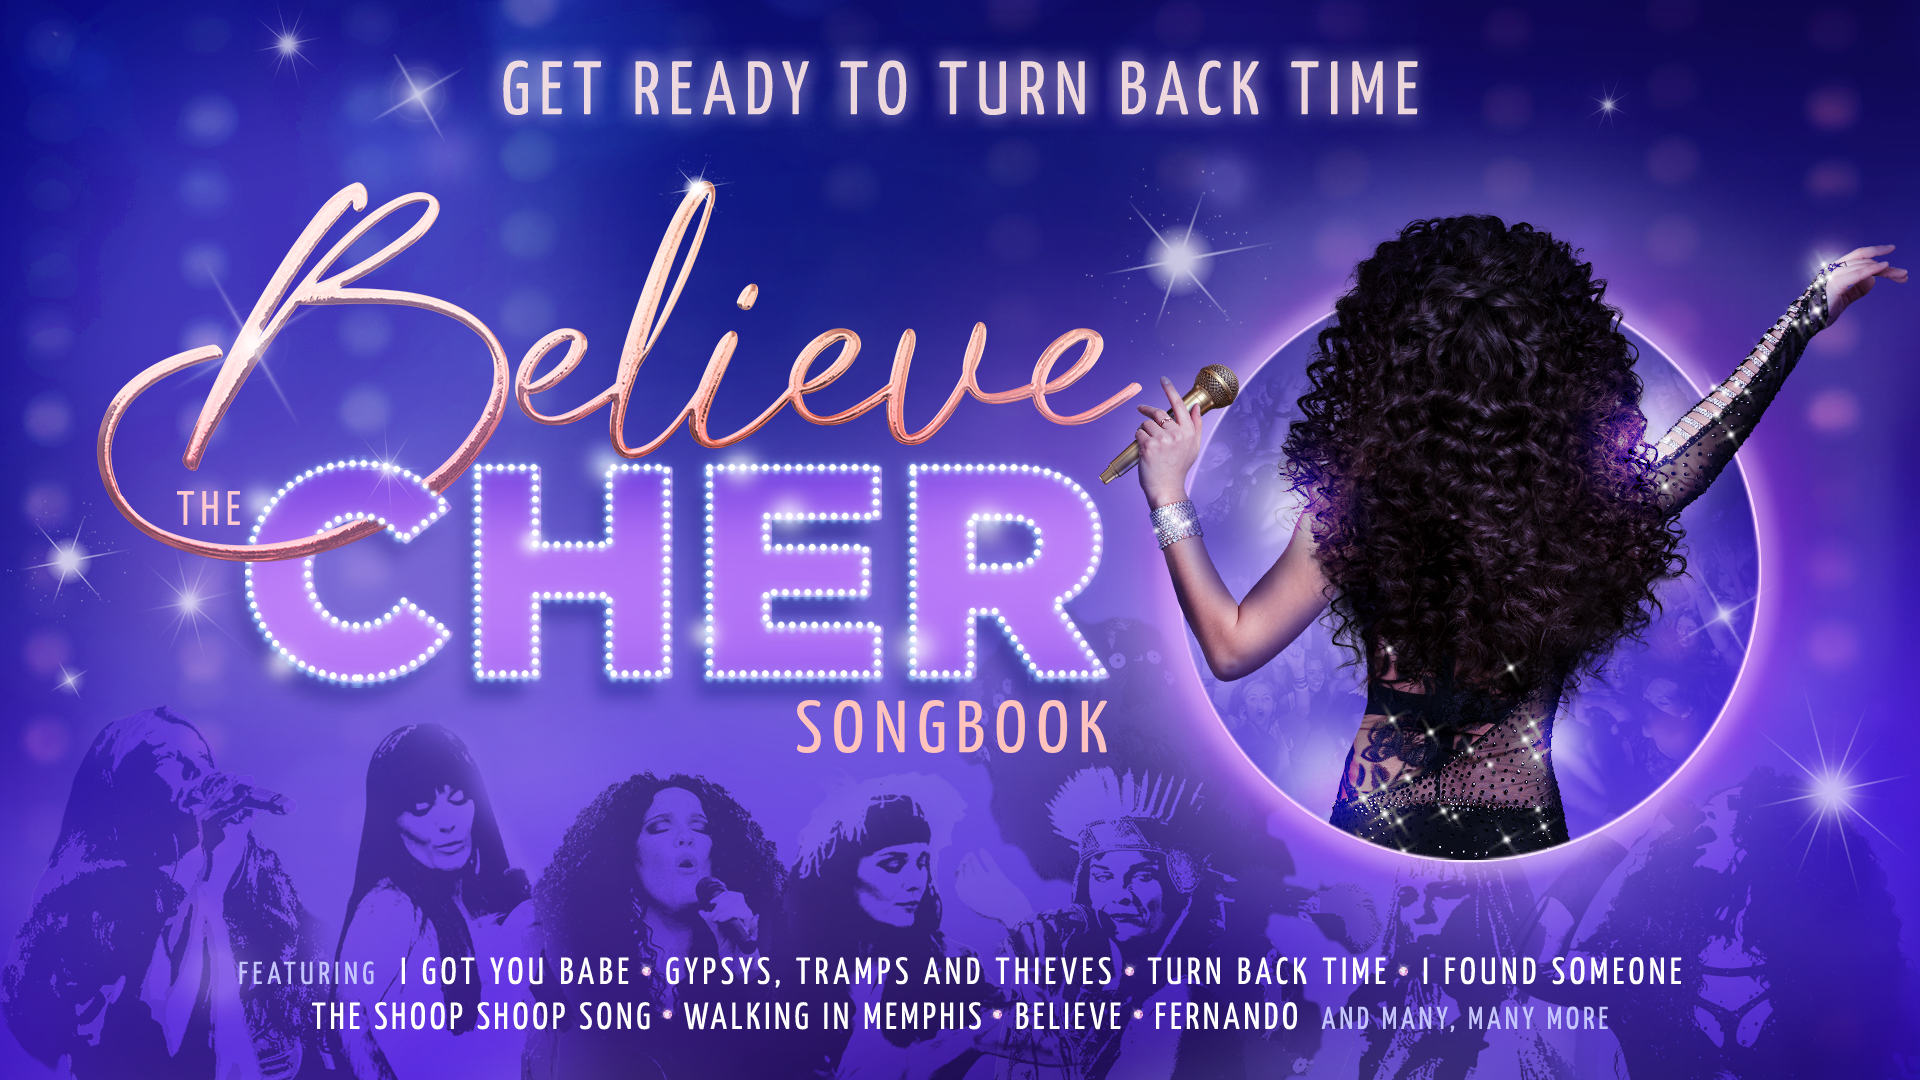 Believe The Cher Songbook